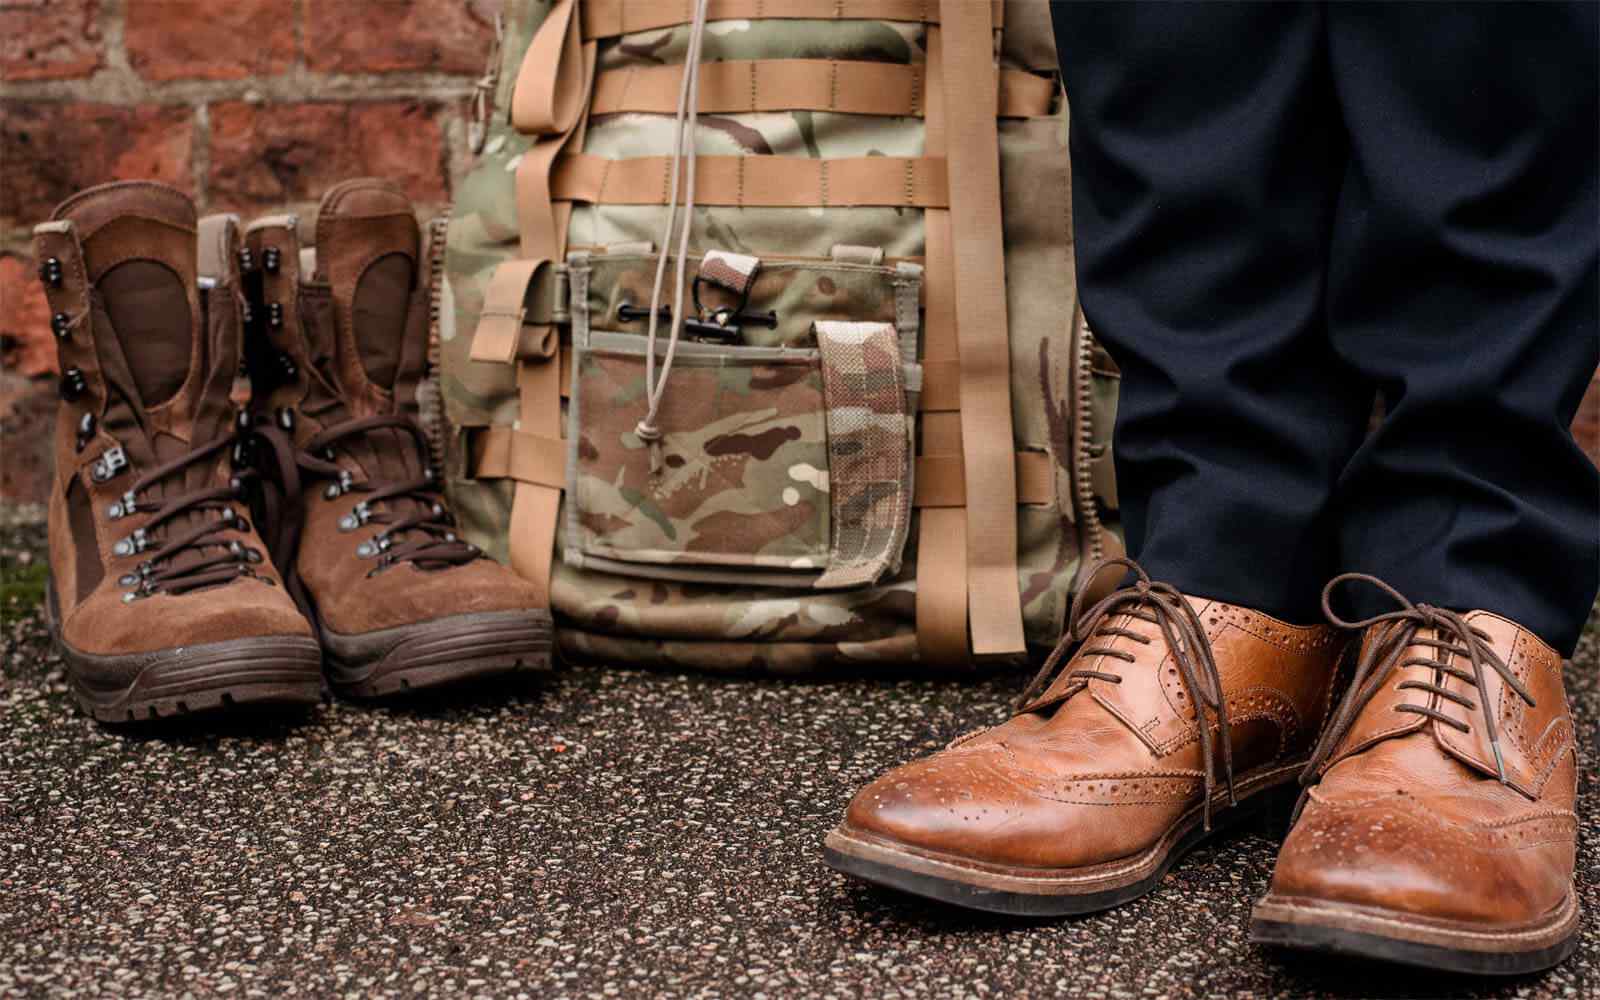 Man's shoes next to a bag 